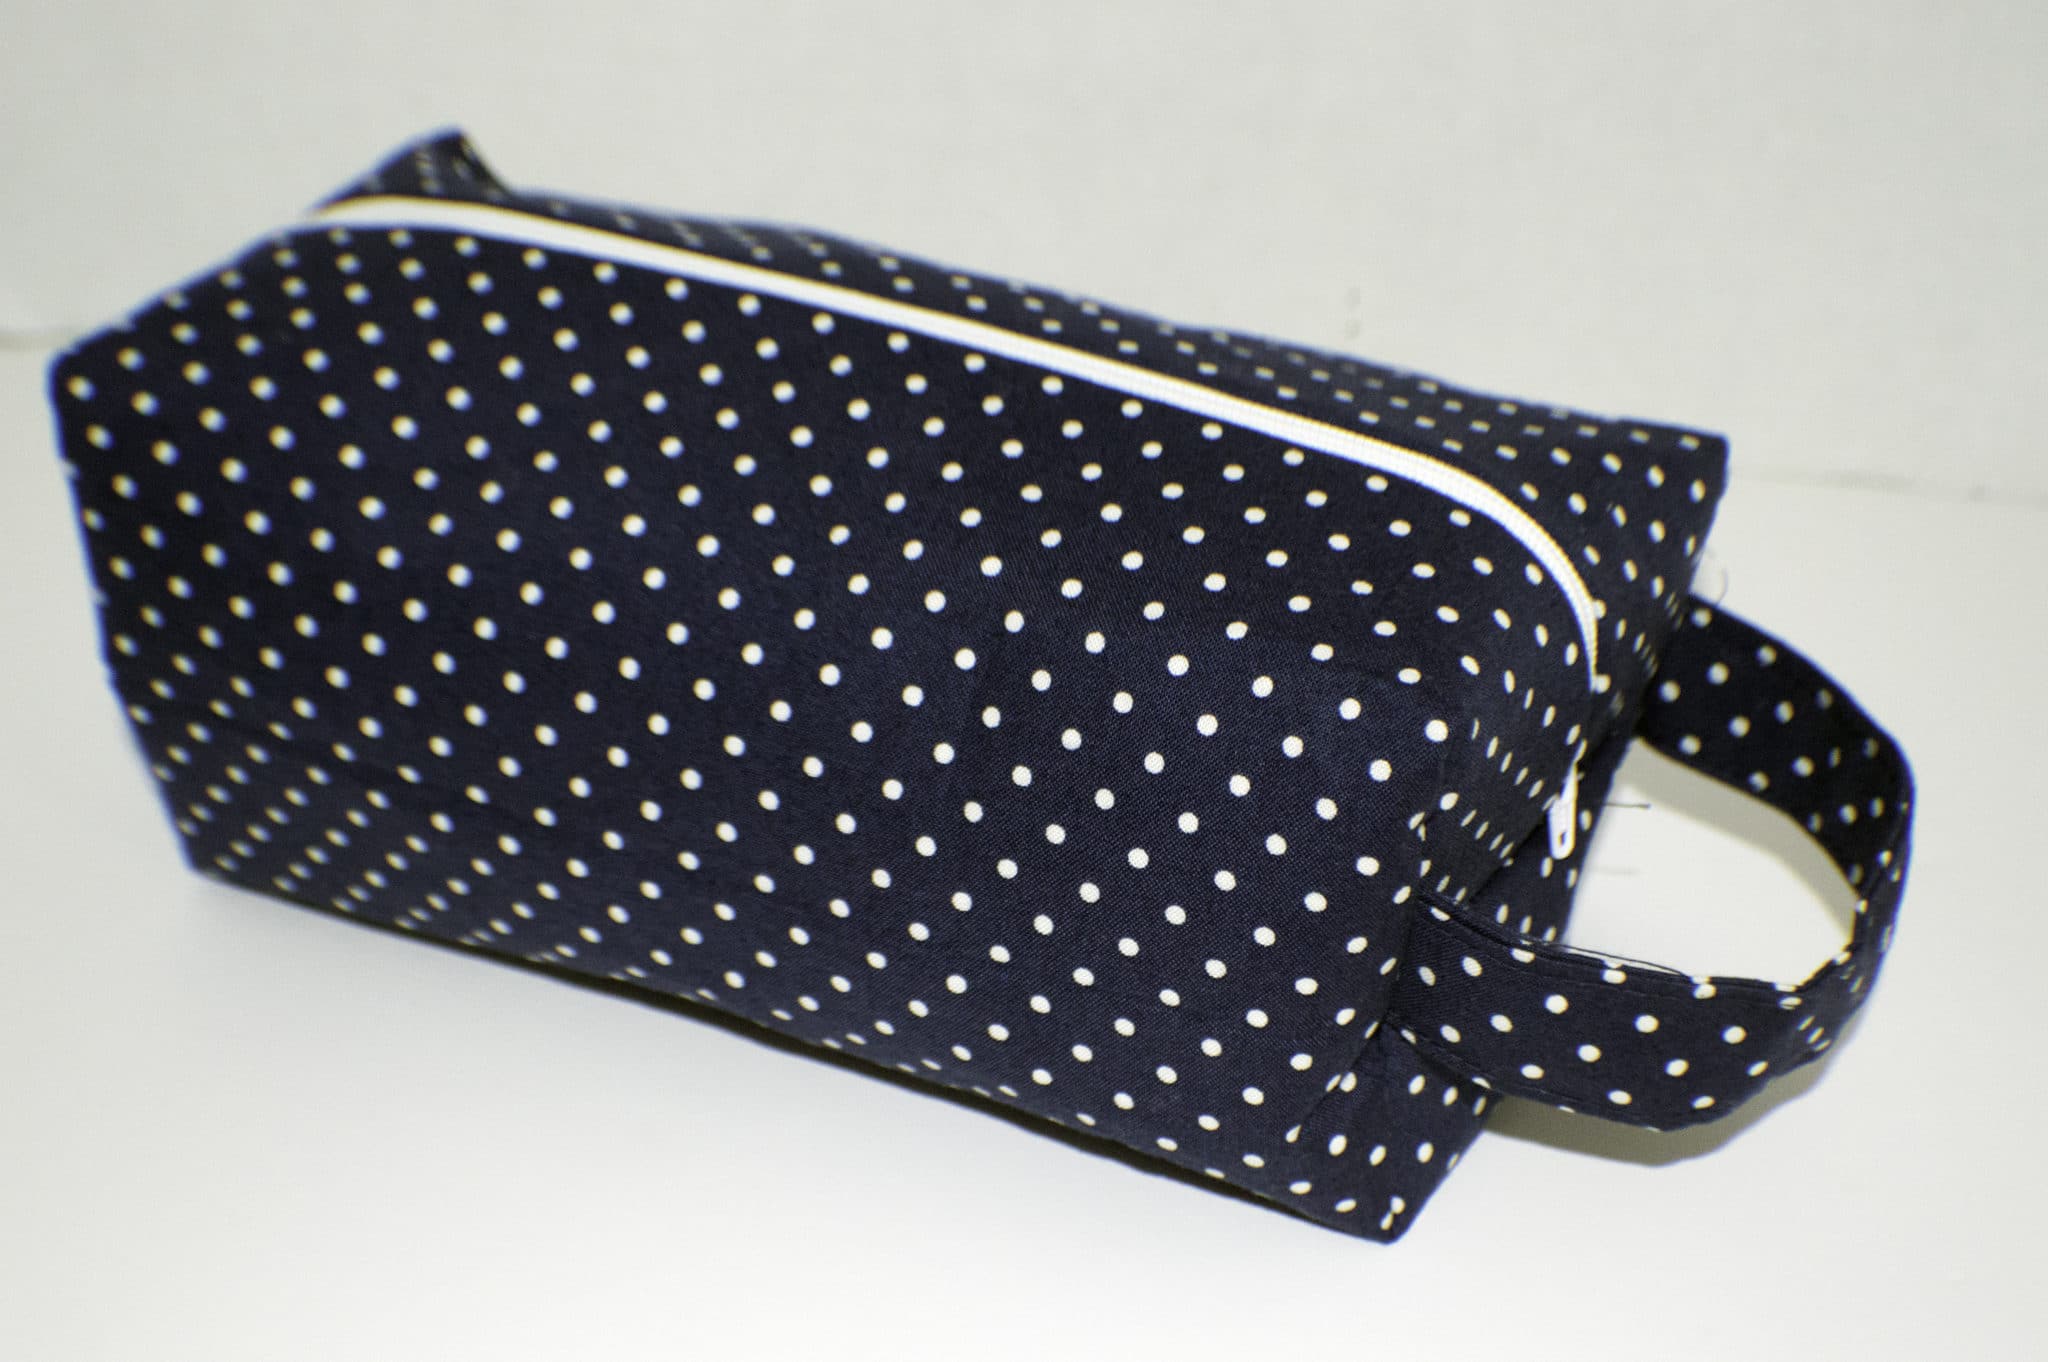 DIY DOUBLE ZIPPER POUCH BAG  TWO Zipper Box Pouch Tutorial